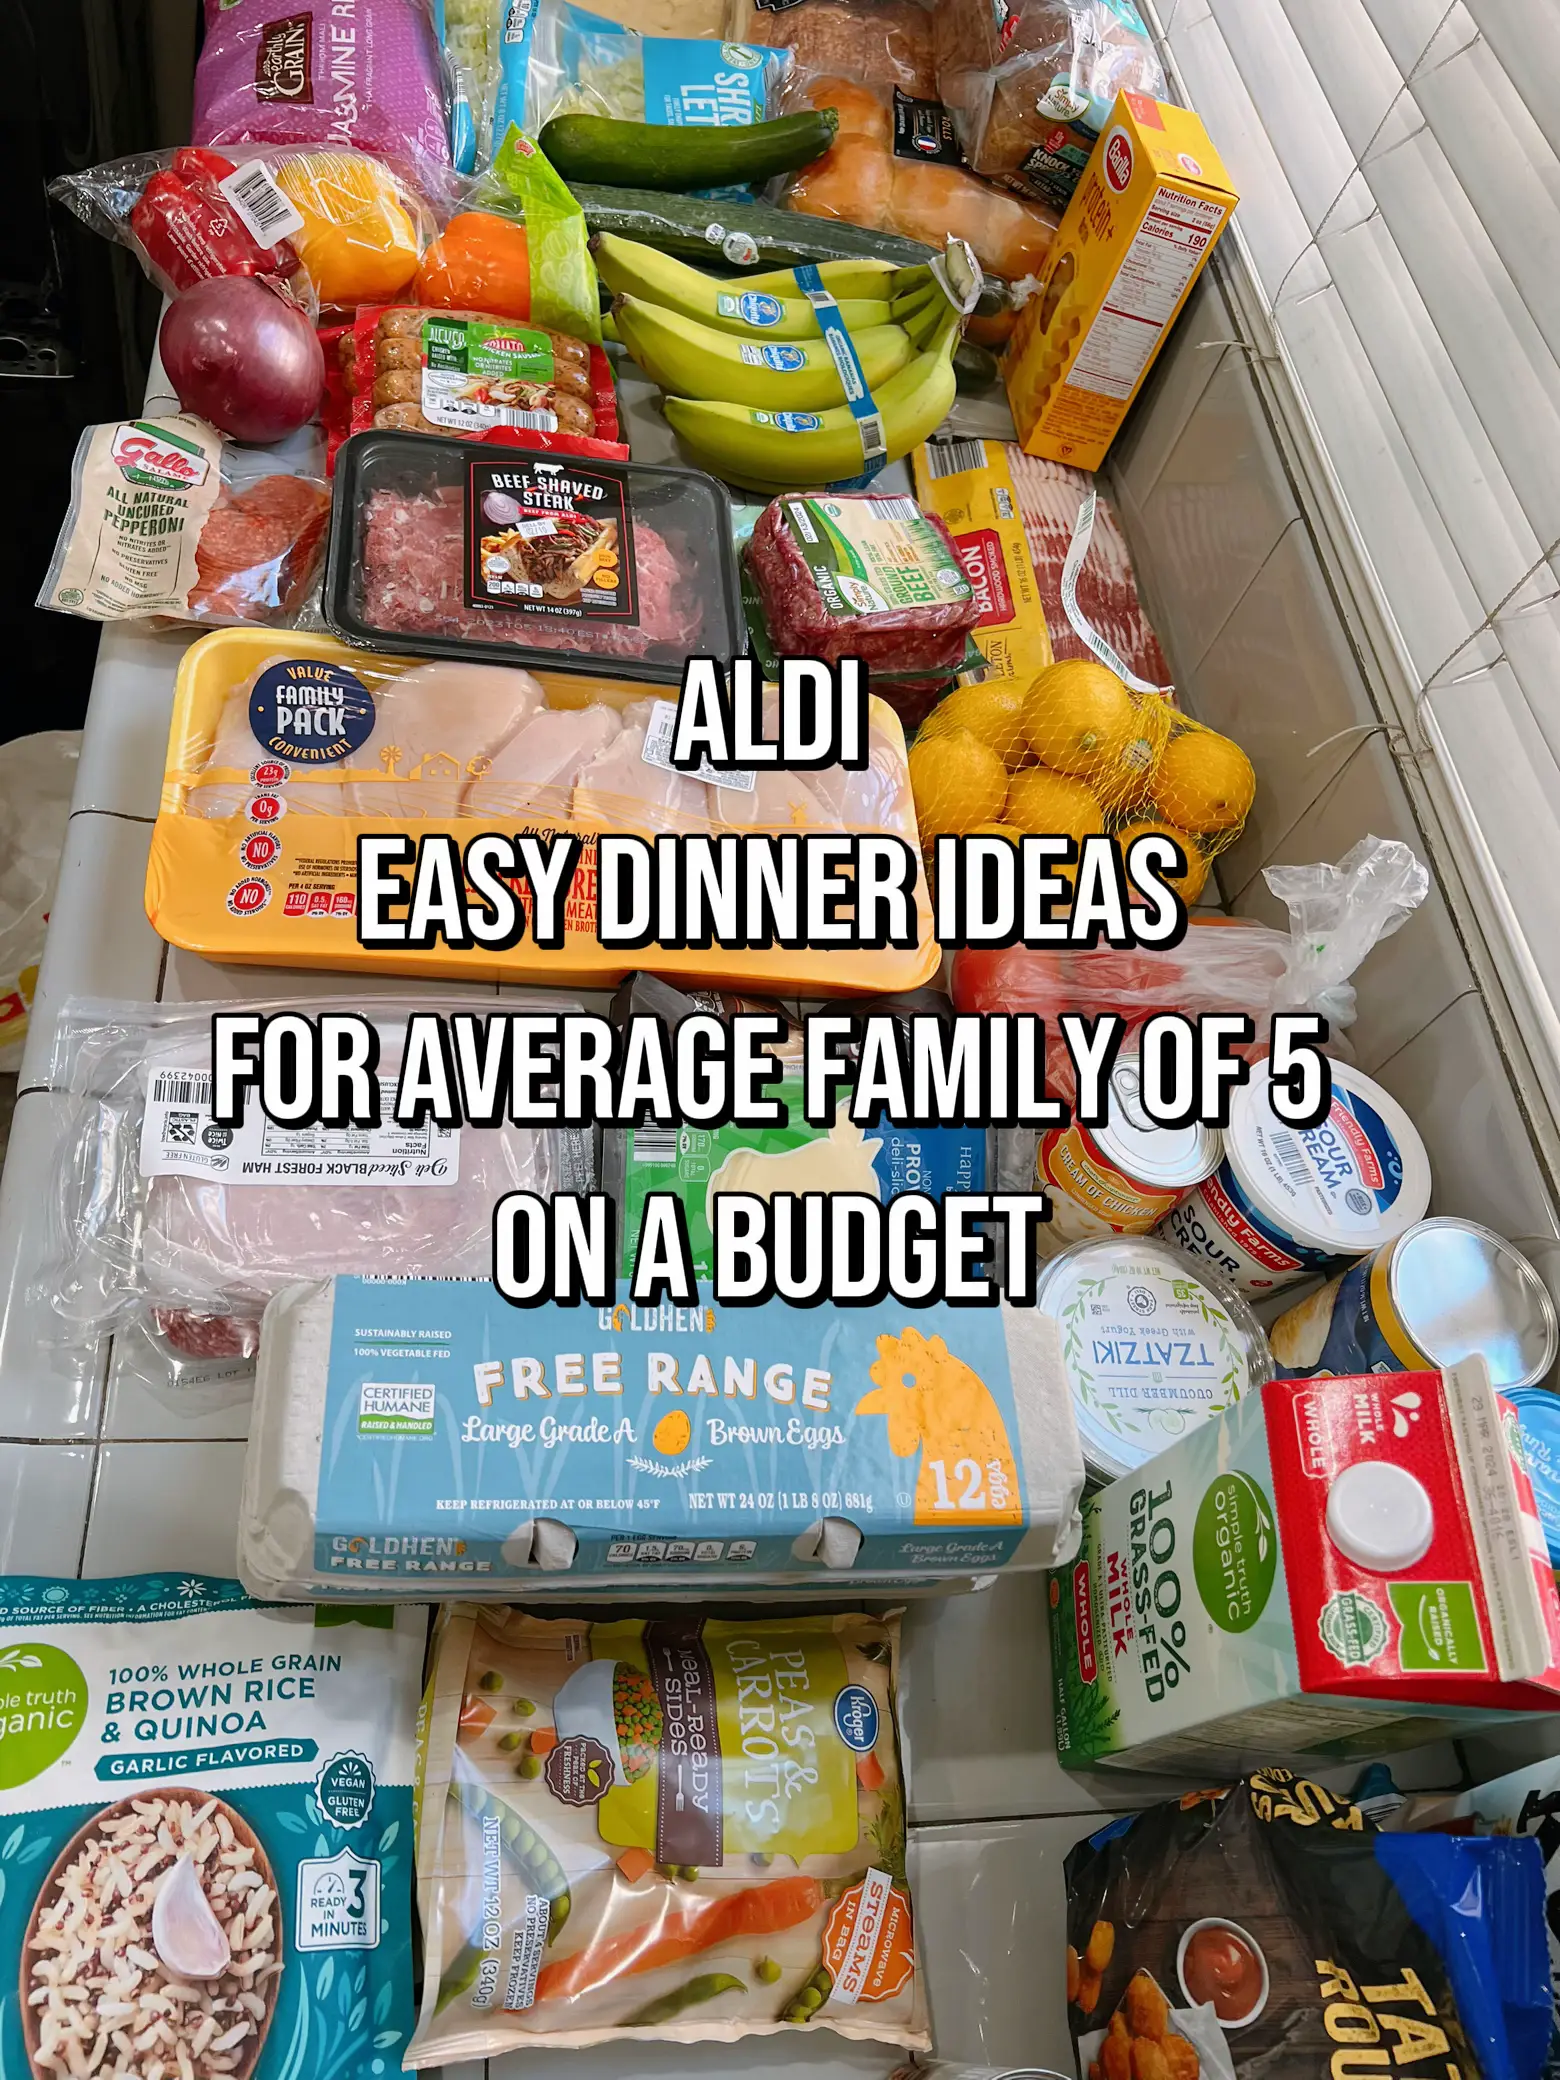 Aldi grocery haul for meal ideas - Lemon8 Search